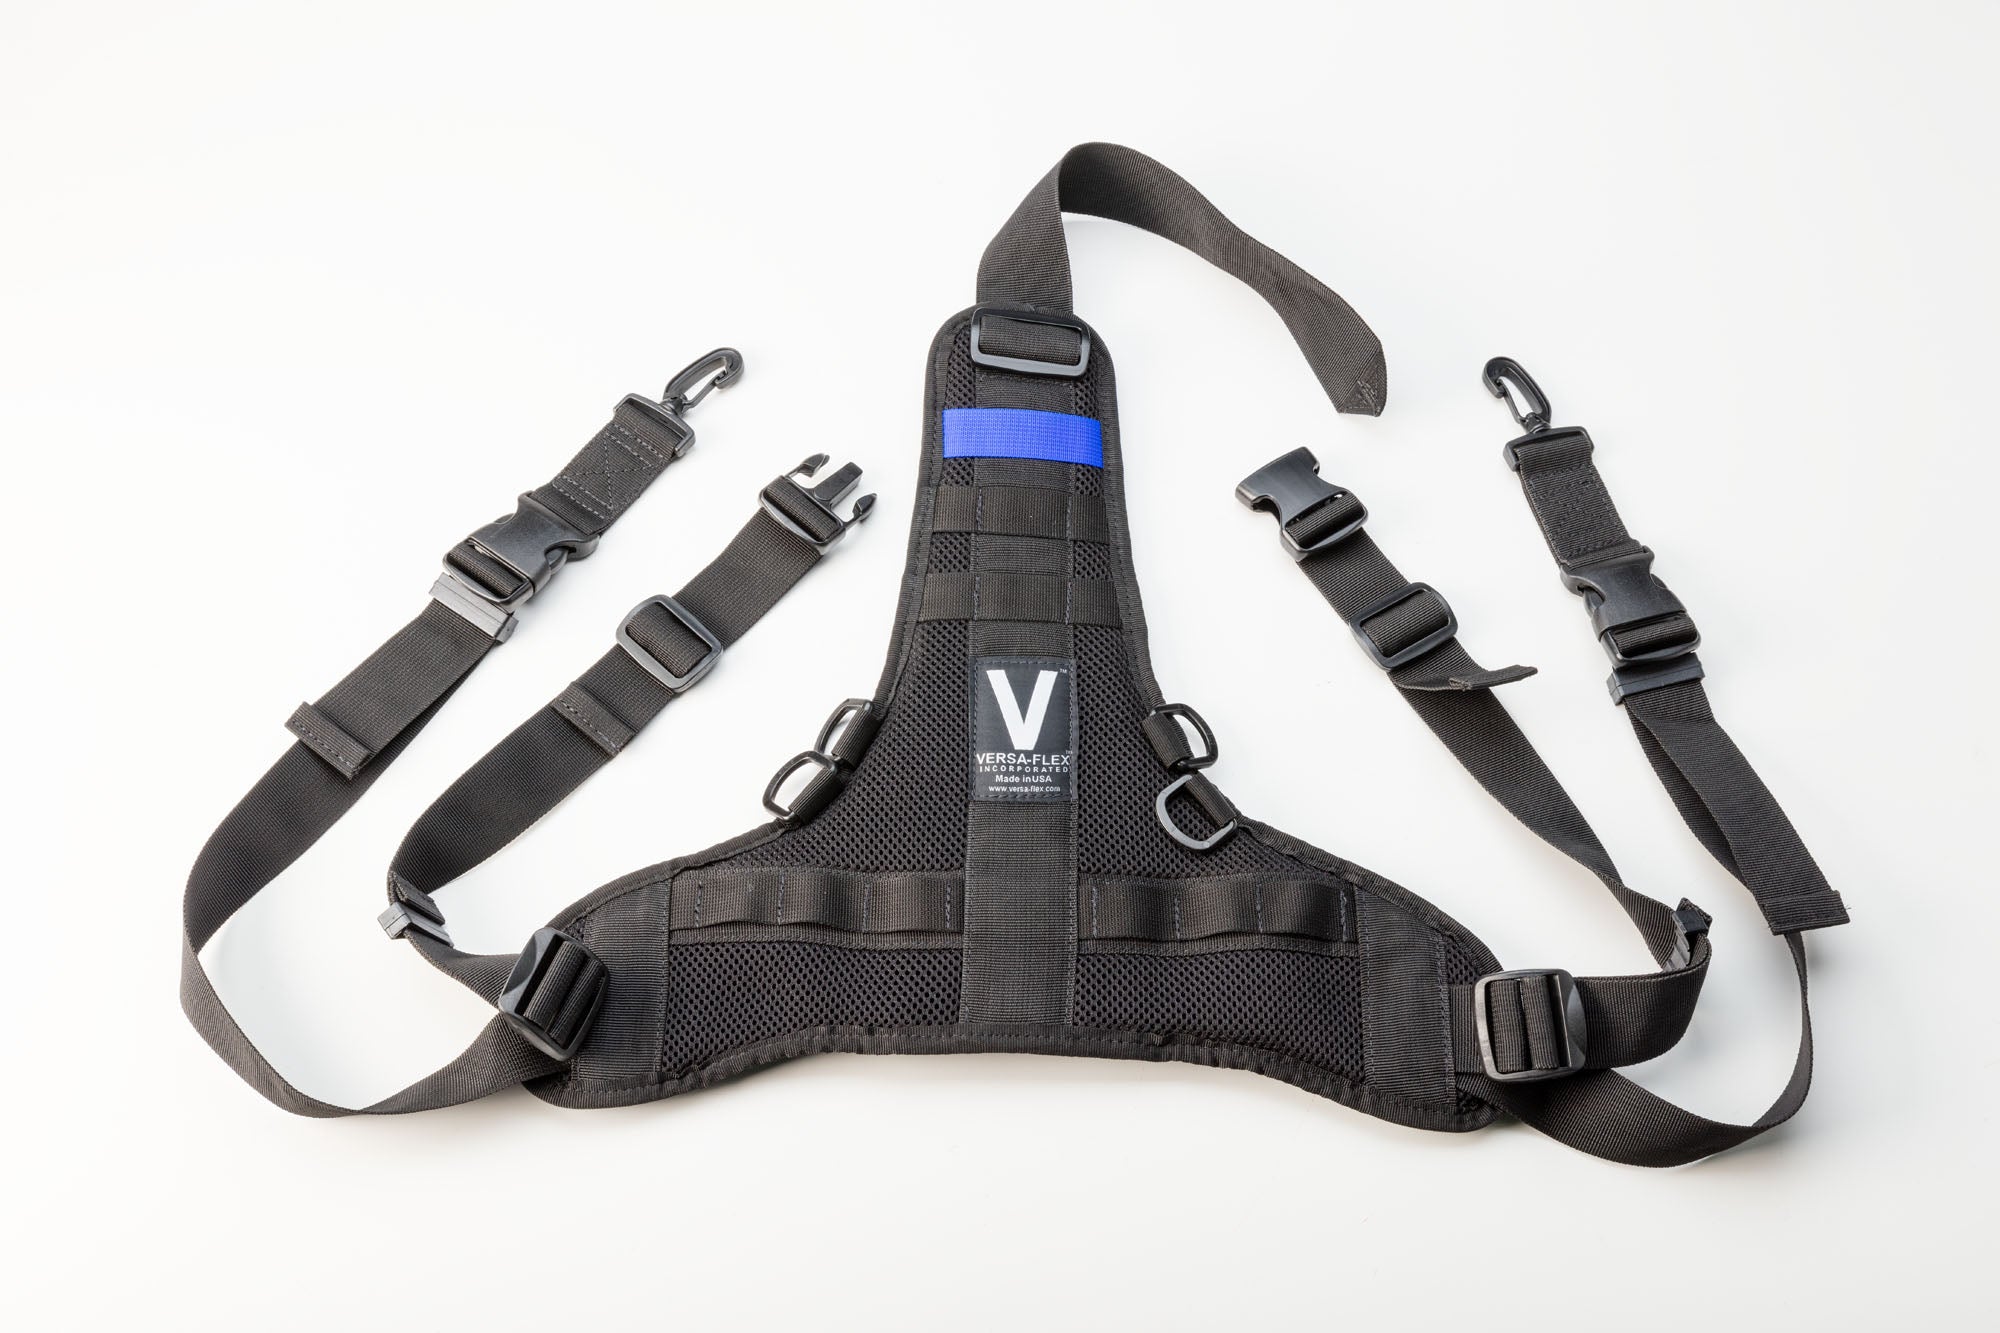 Versa-Flex BHS1 Breathable Professional Audio Harness